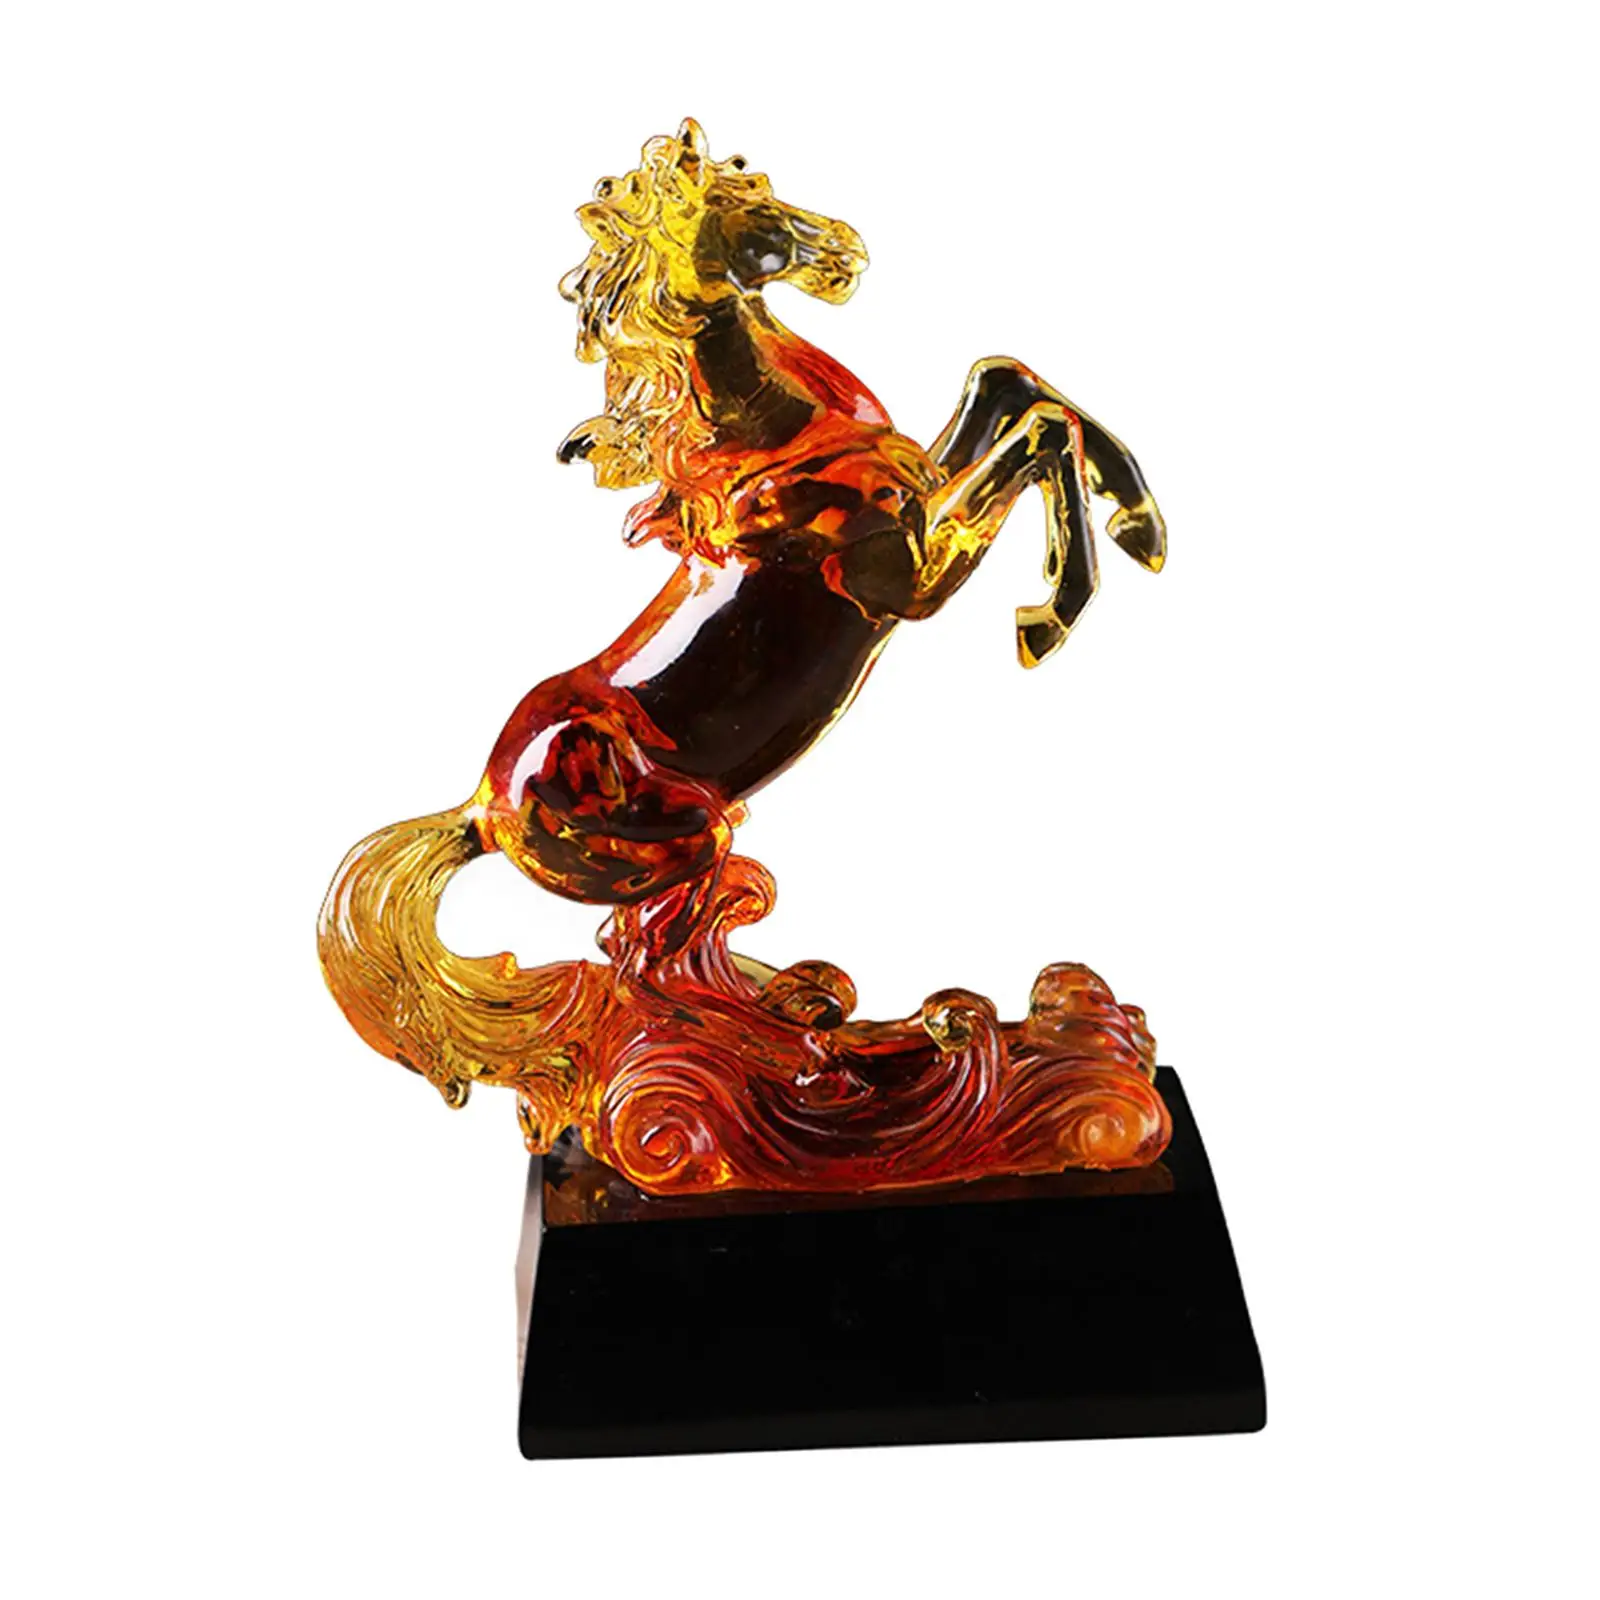 European Horse Statue Figurine Fengshui Model Animal Sculpture Good Lucky for Desktop Home Decor